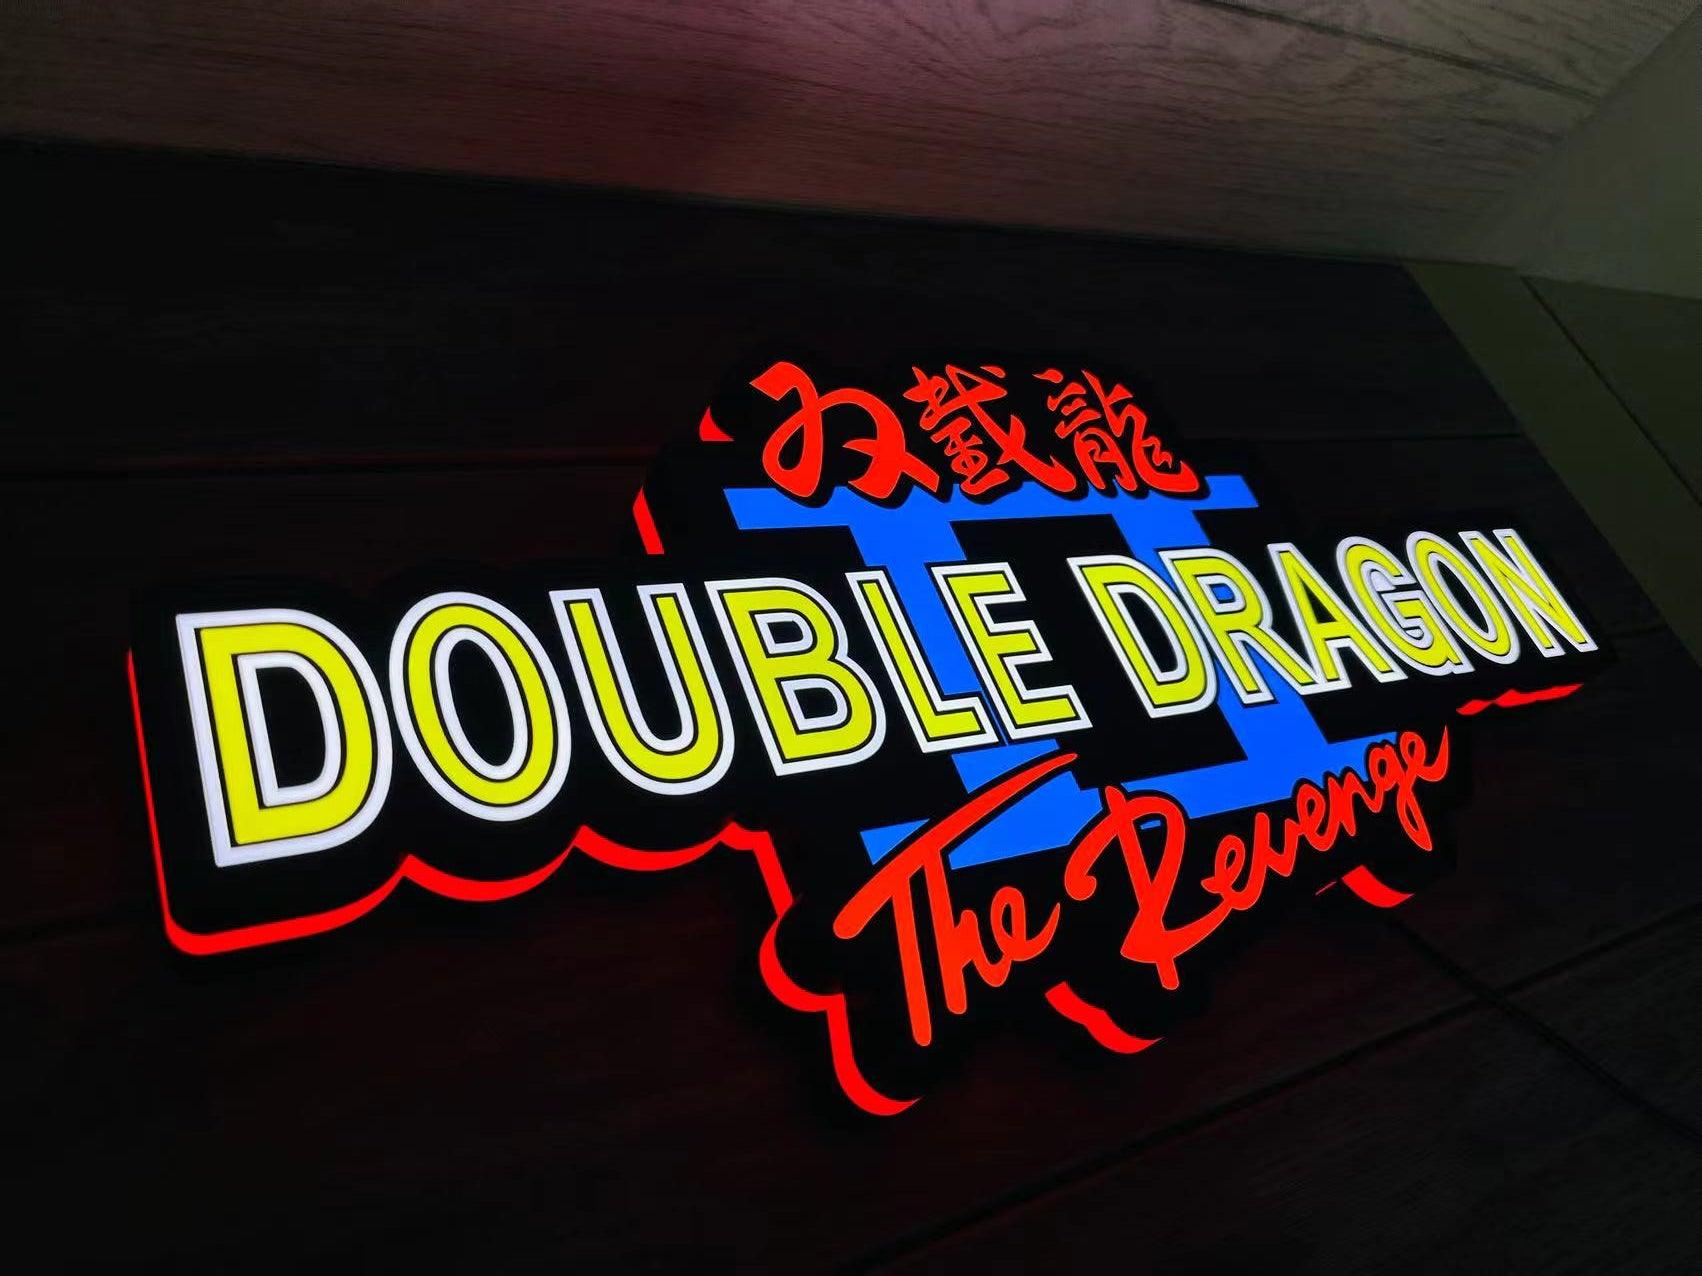 Custom Double Dragon II The Revenge Logo LED Nightlight 3D Print Desktop Lightbox Signs RGB - FYLZGO Signs